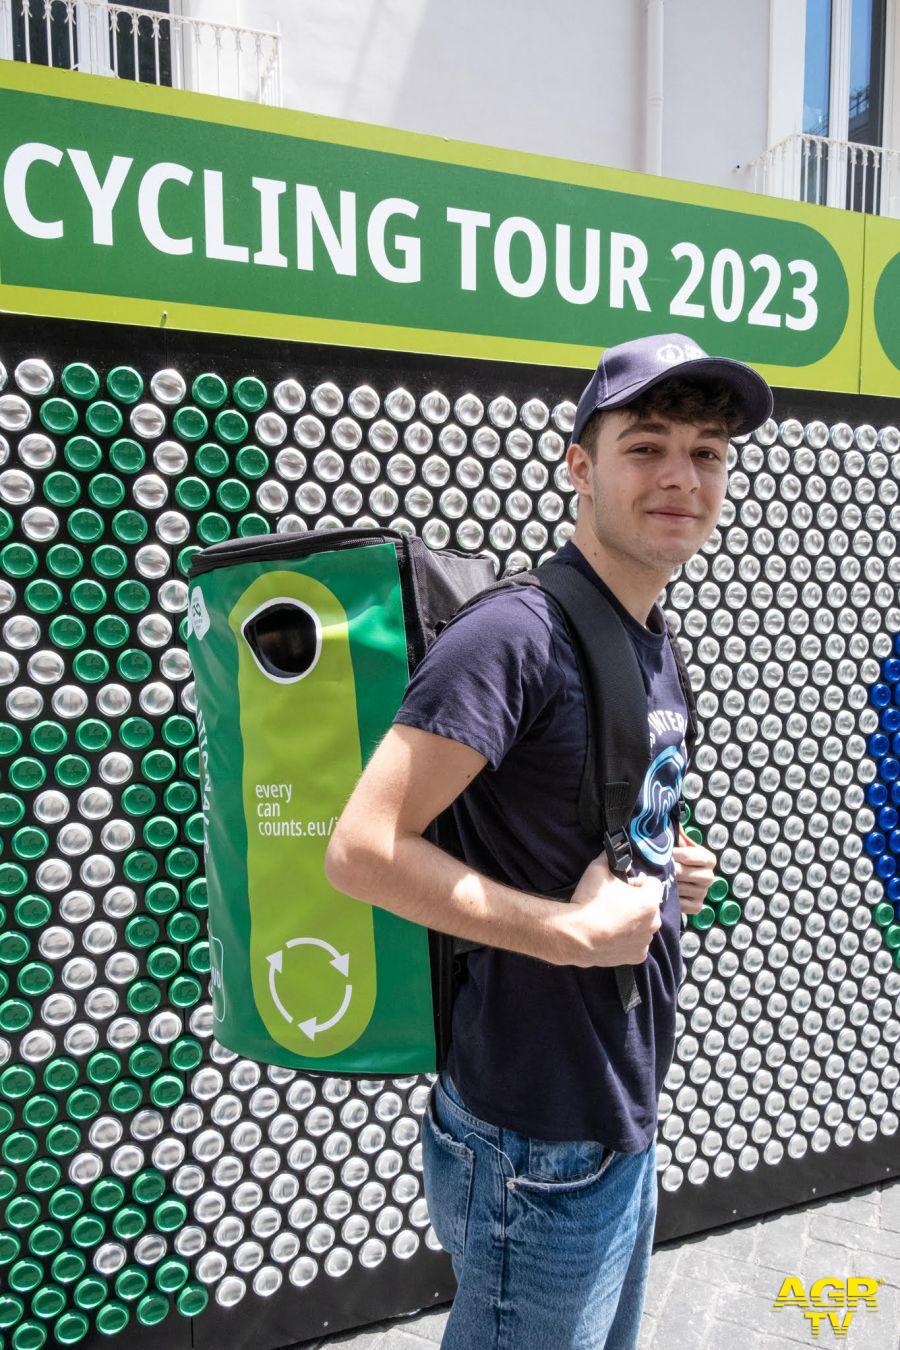 International recycling tour a Bari